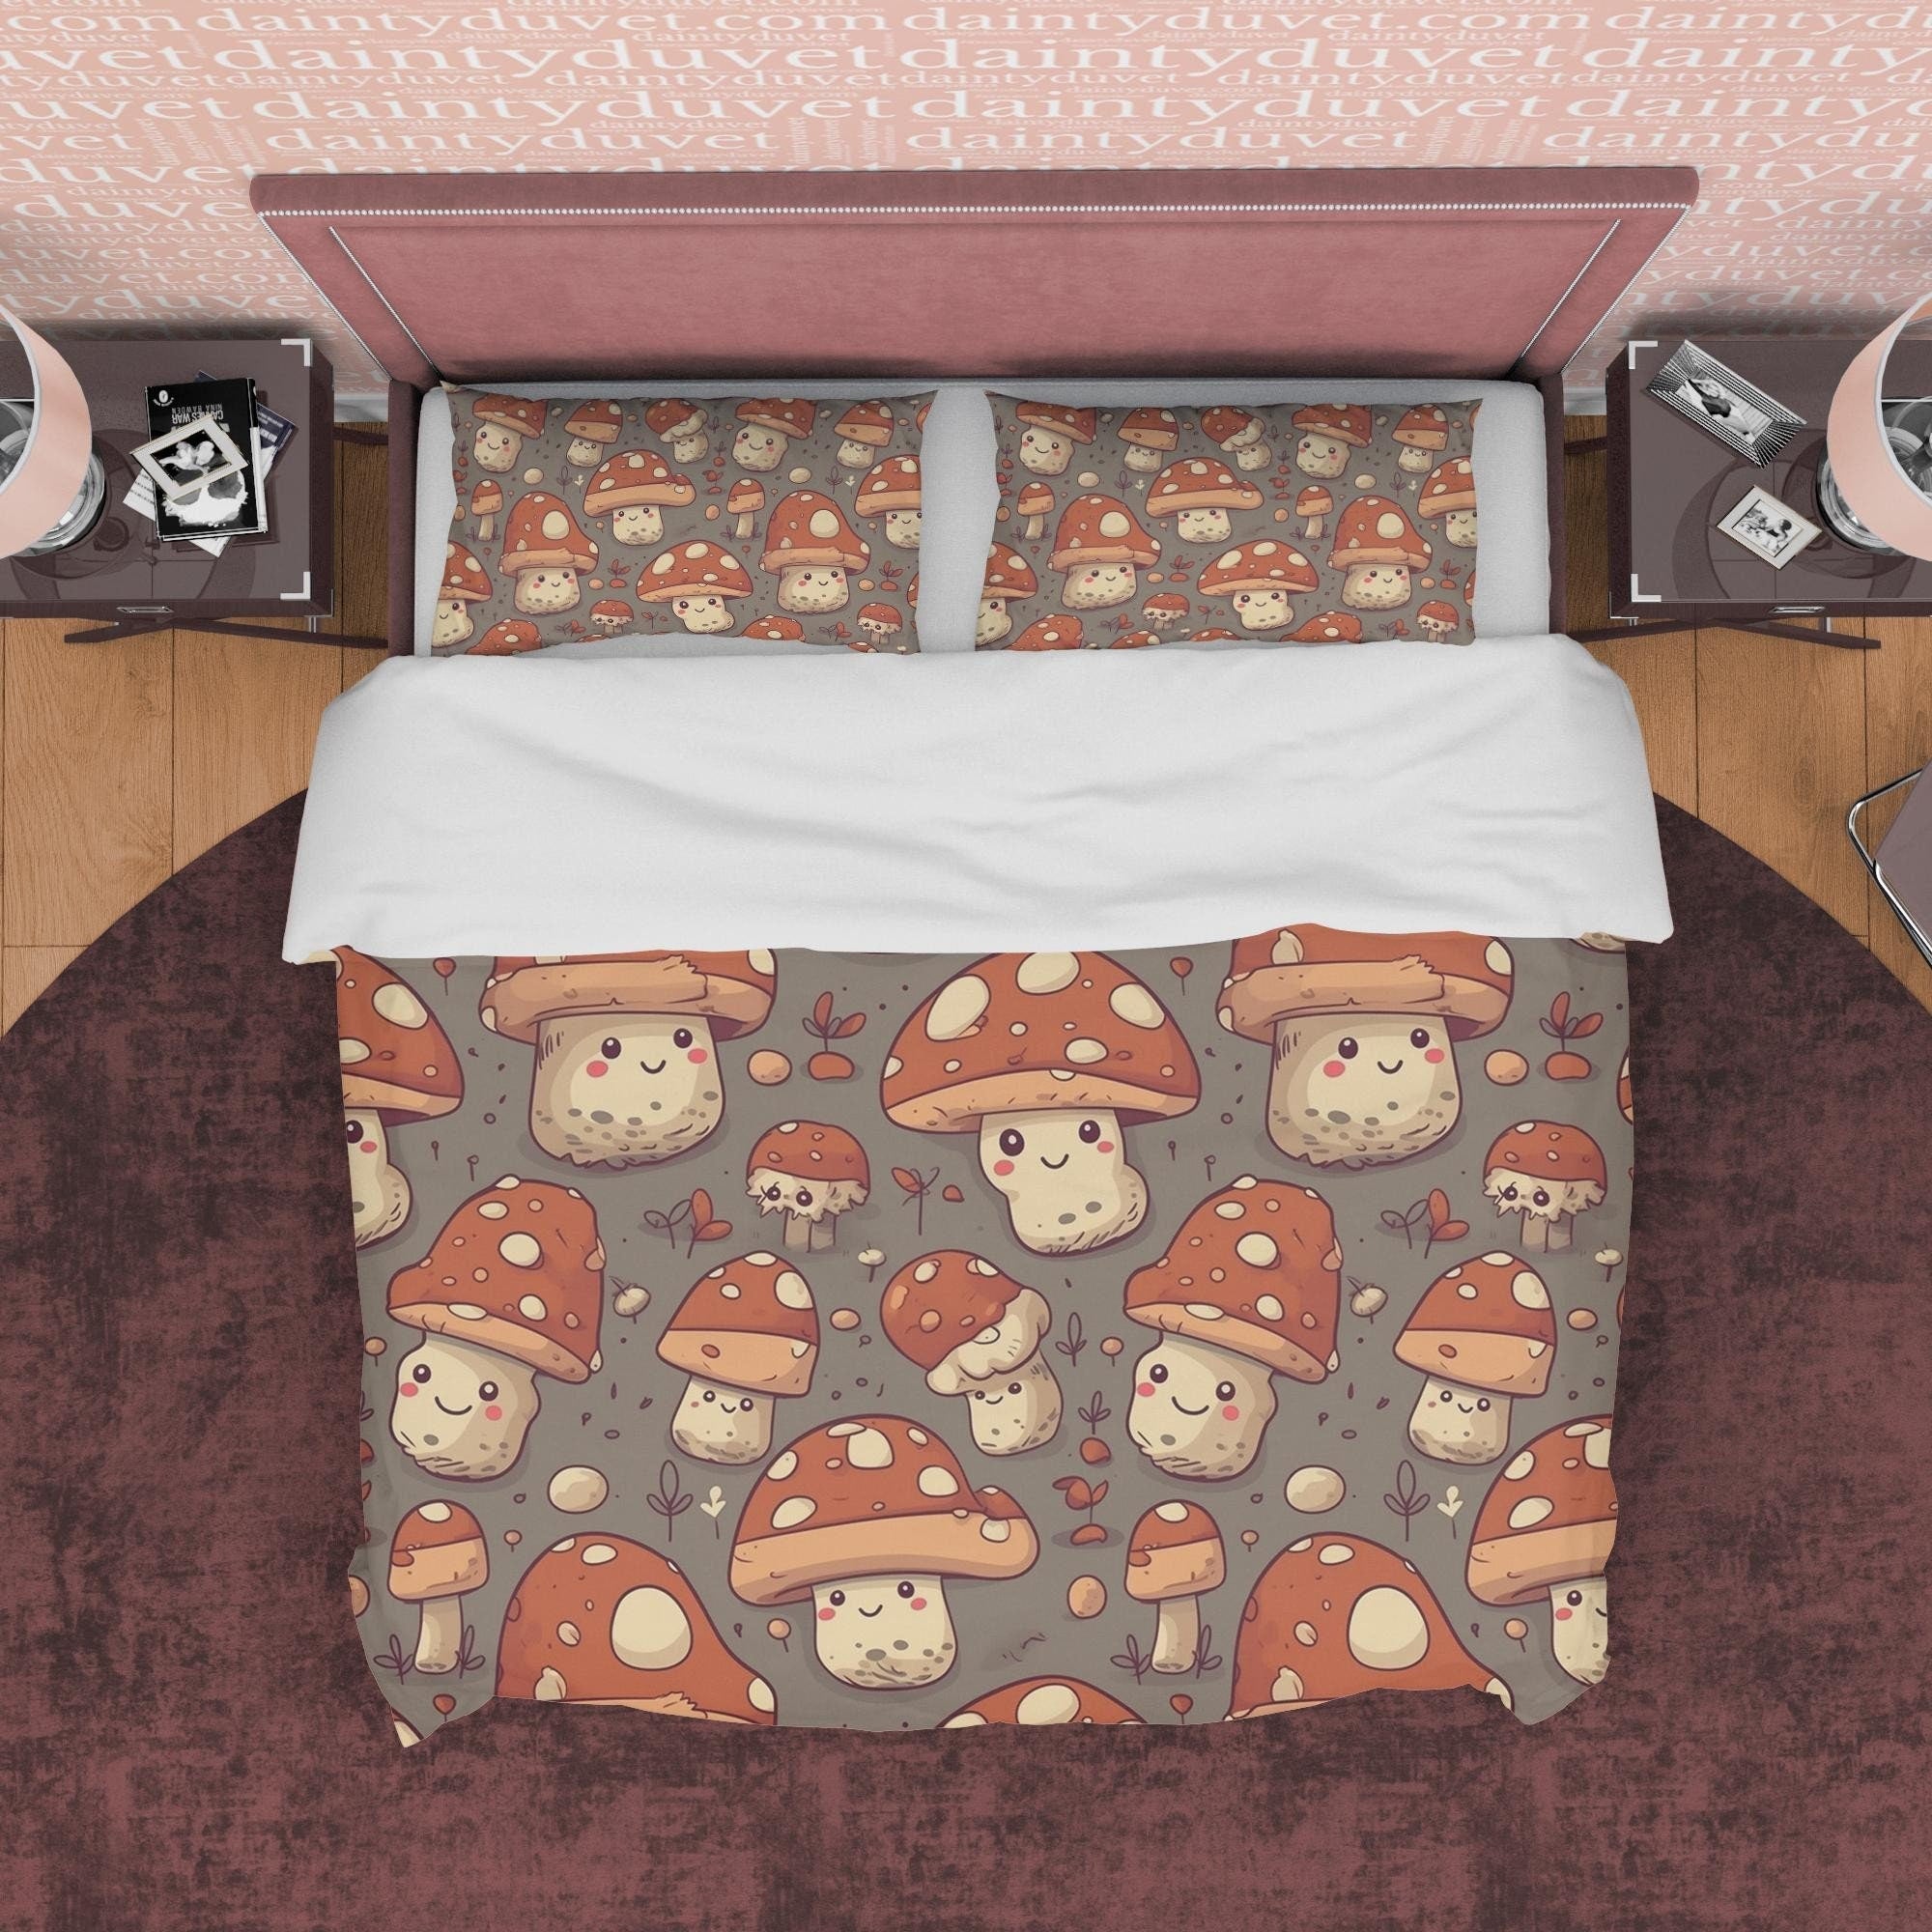 Mushroom Retro Bedding Set, Choco Brown Duvet Cover, Funny Quilt Cover, Cute Fungi Bedspread, 70s Nostalgia Bed Cover, Zipper Bedding